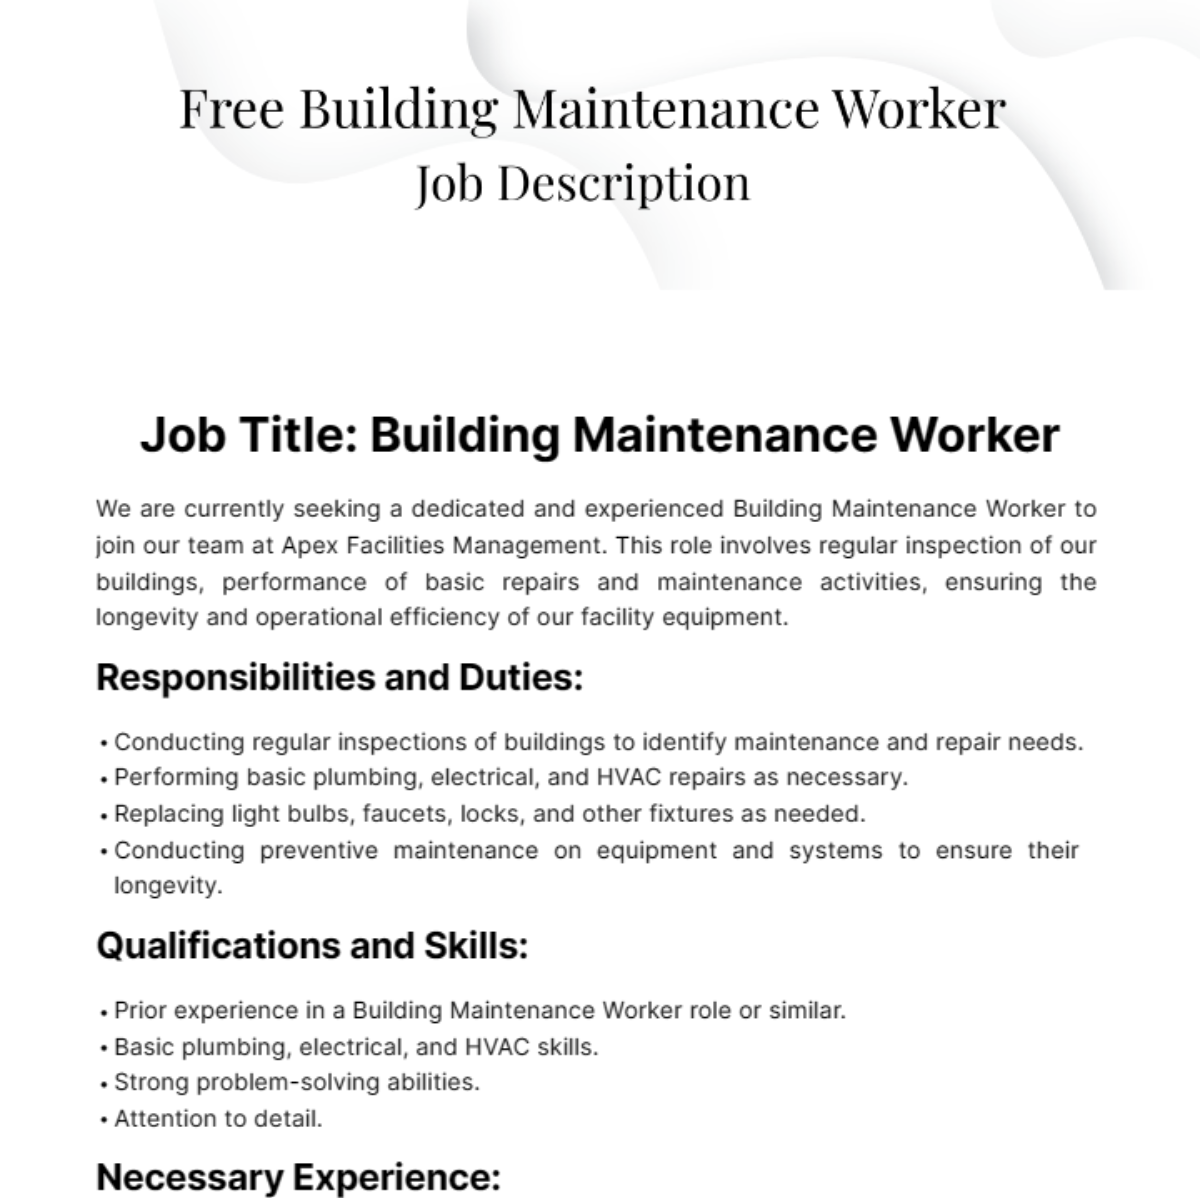 Free Building Maintenance Worker Job Description Template